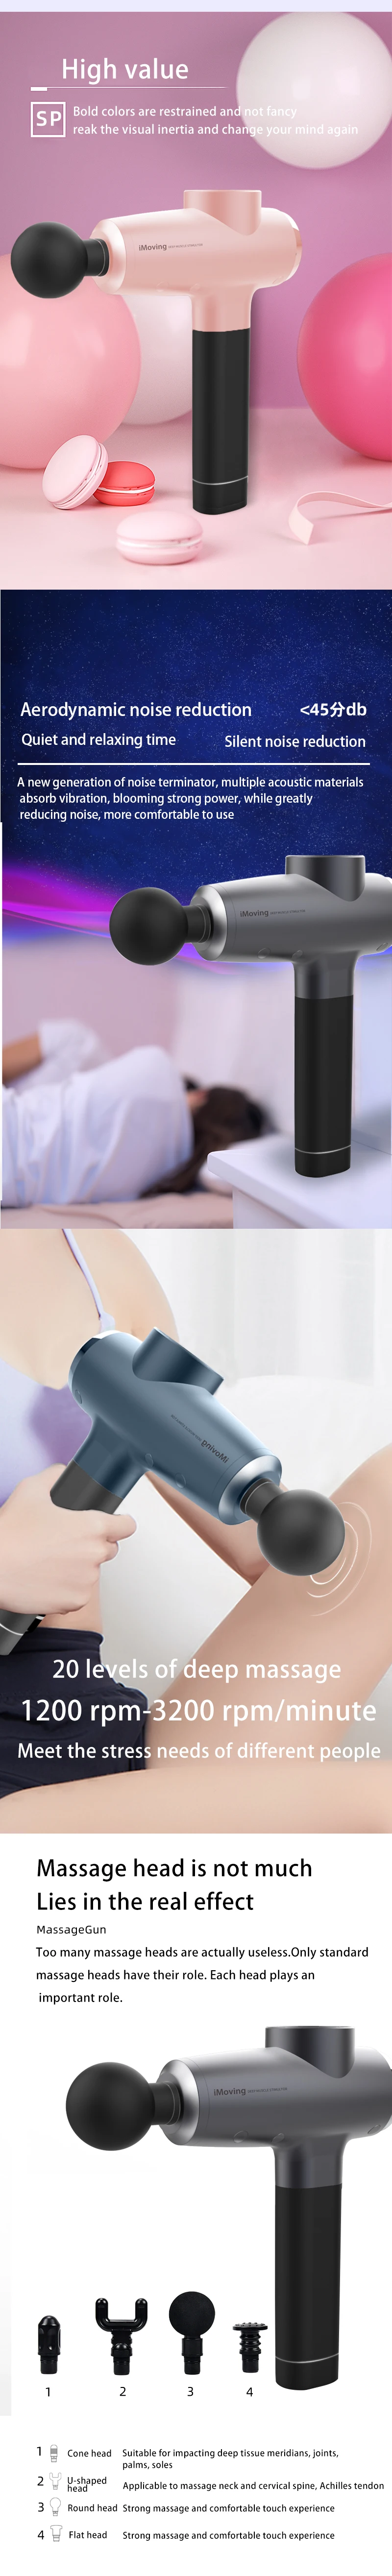 Professional wireless brushless motor handheld vibration  massage gun for muscle relaxation